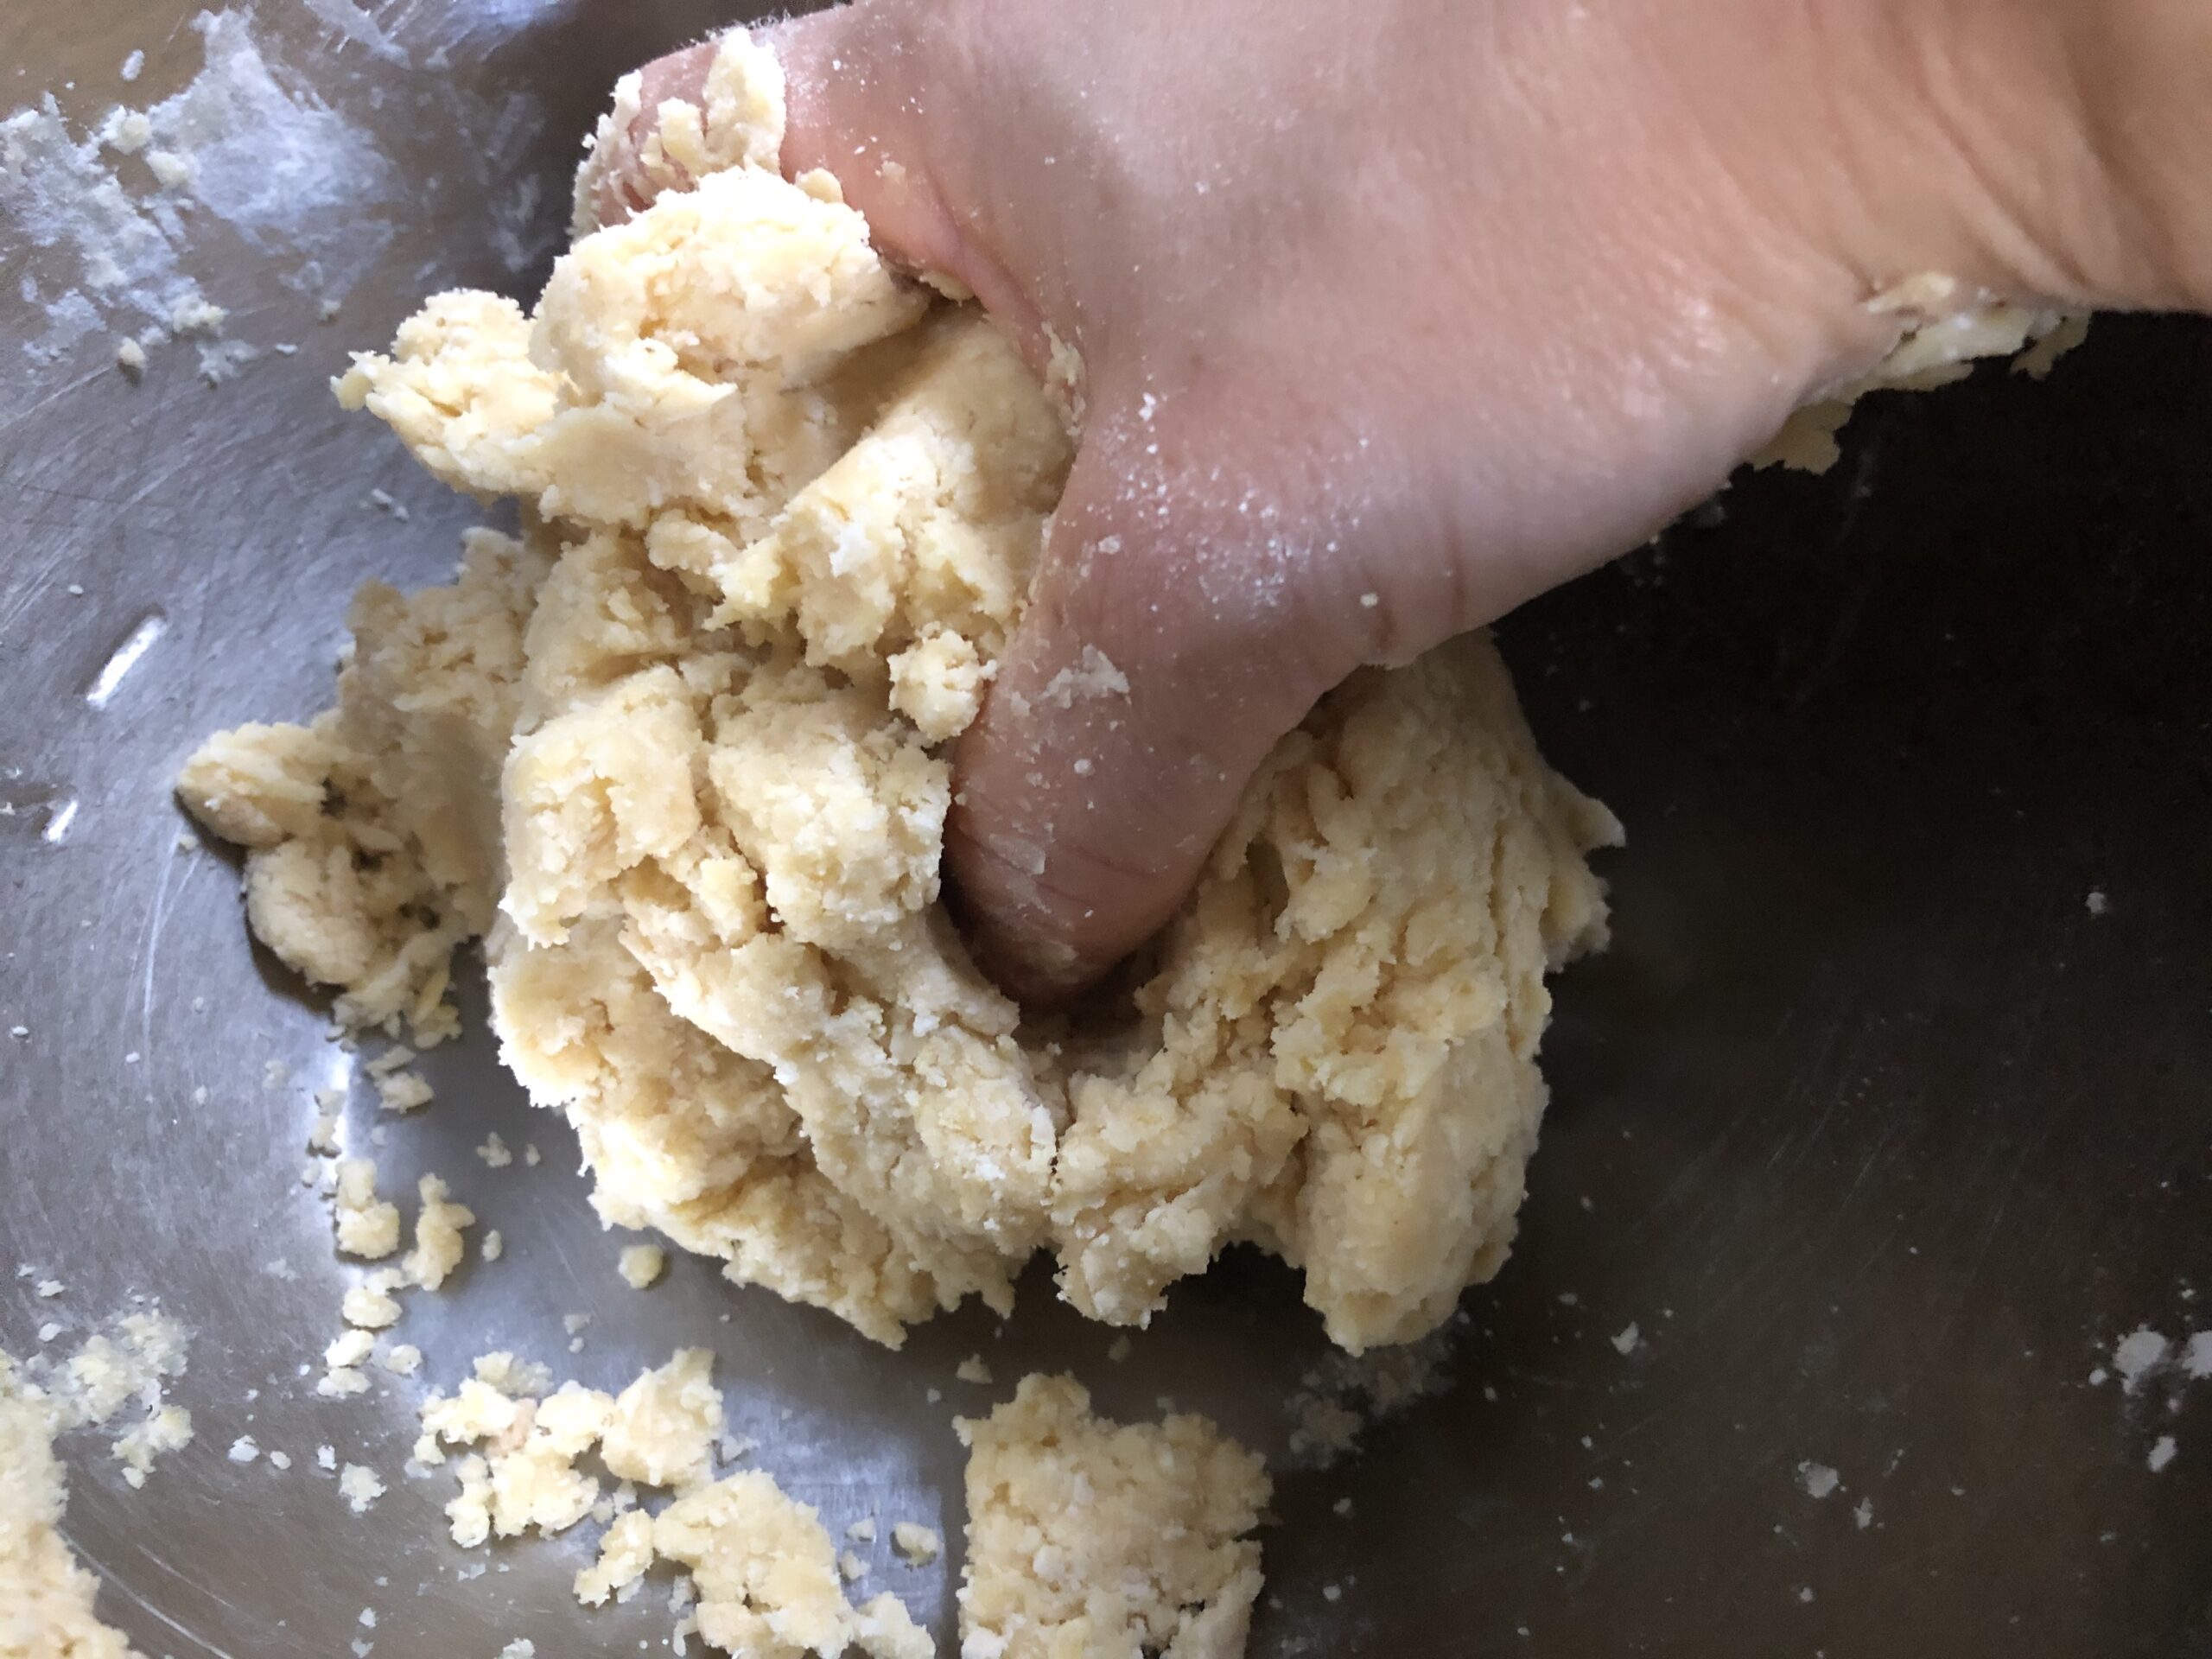 Work the dough